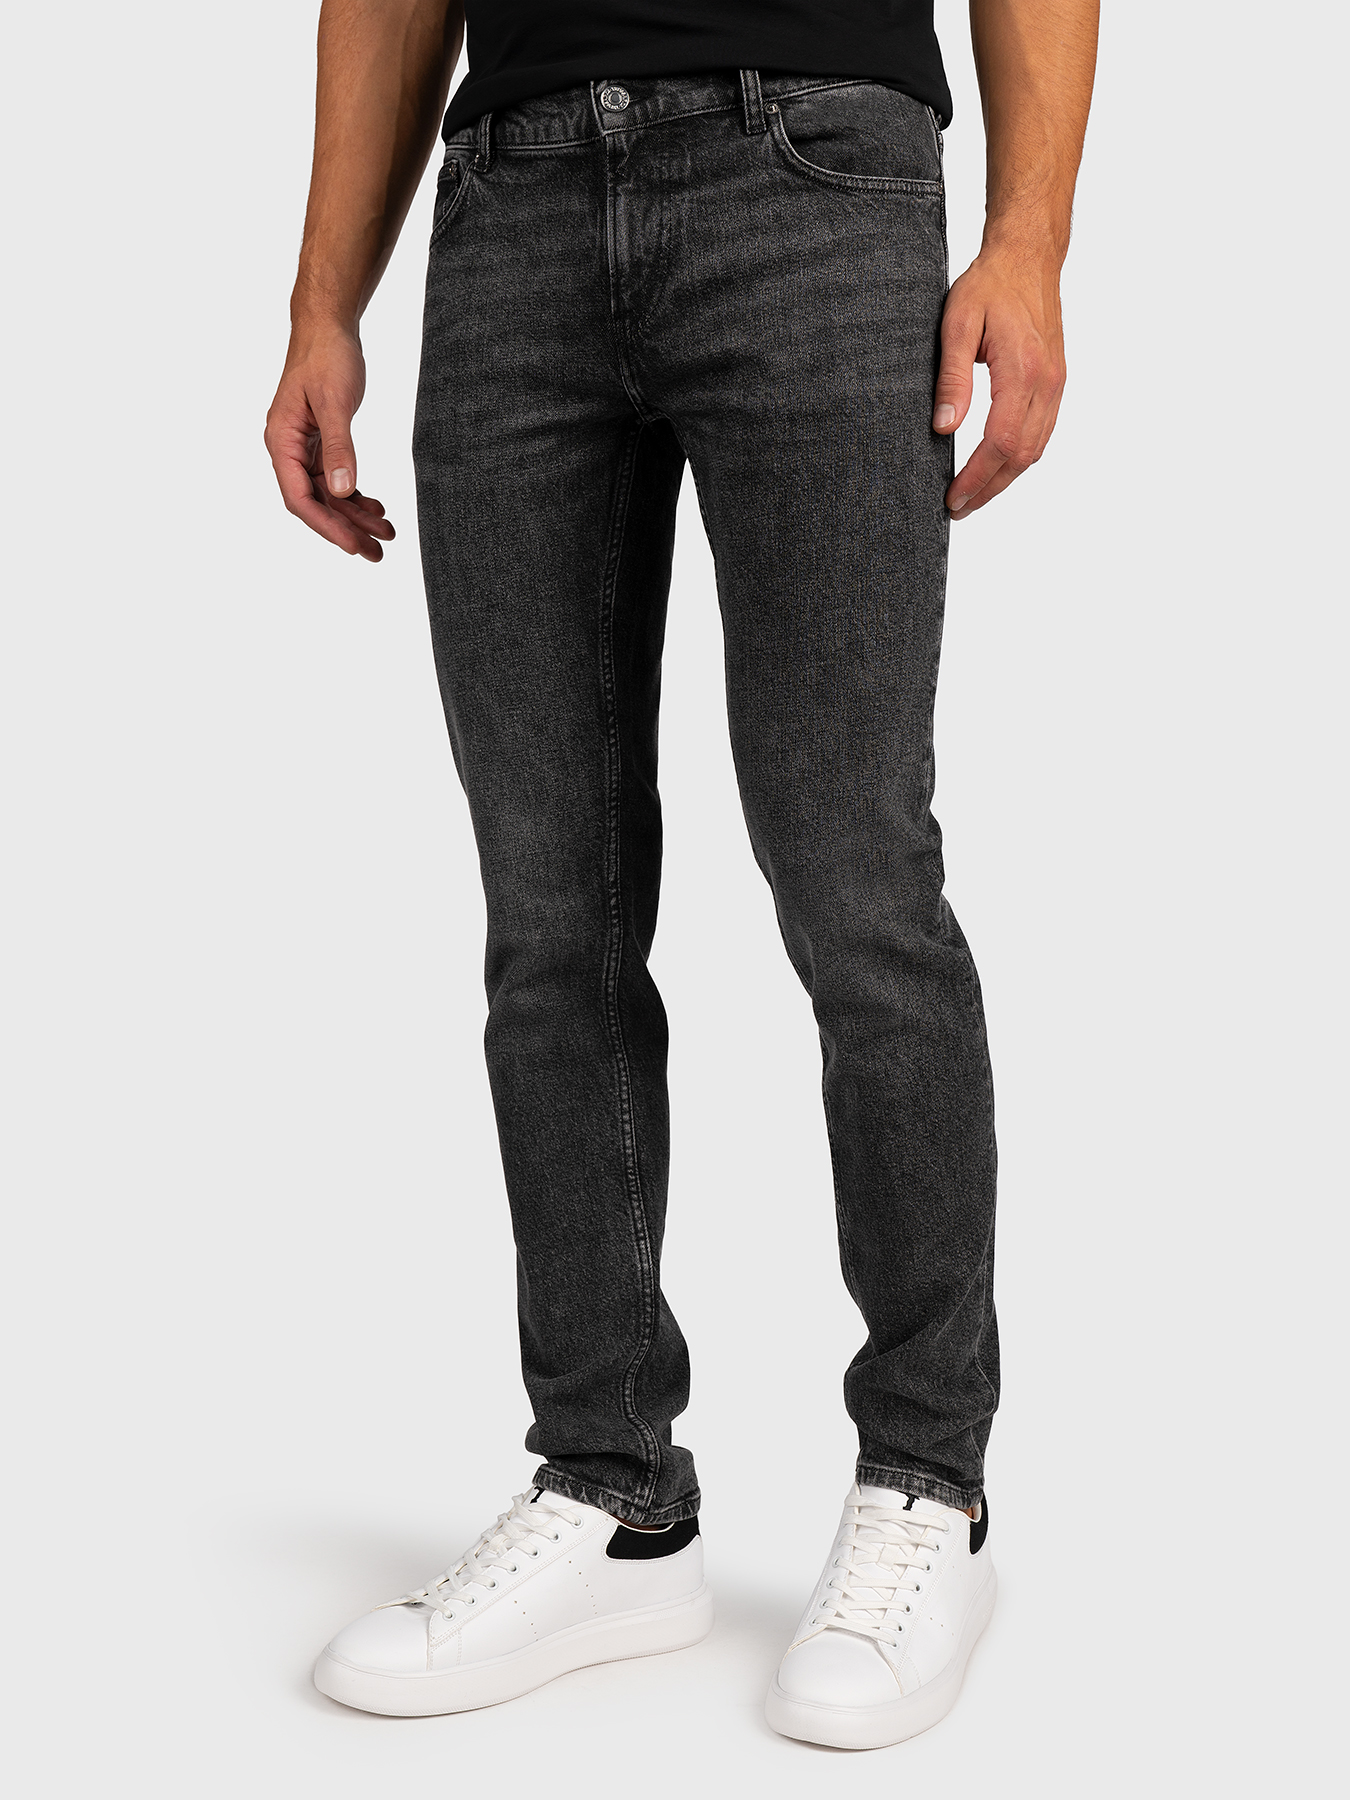 370 CLOSE grey slim jeans brand TRUSSARDI — Globalbrandsstore.com/en